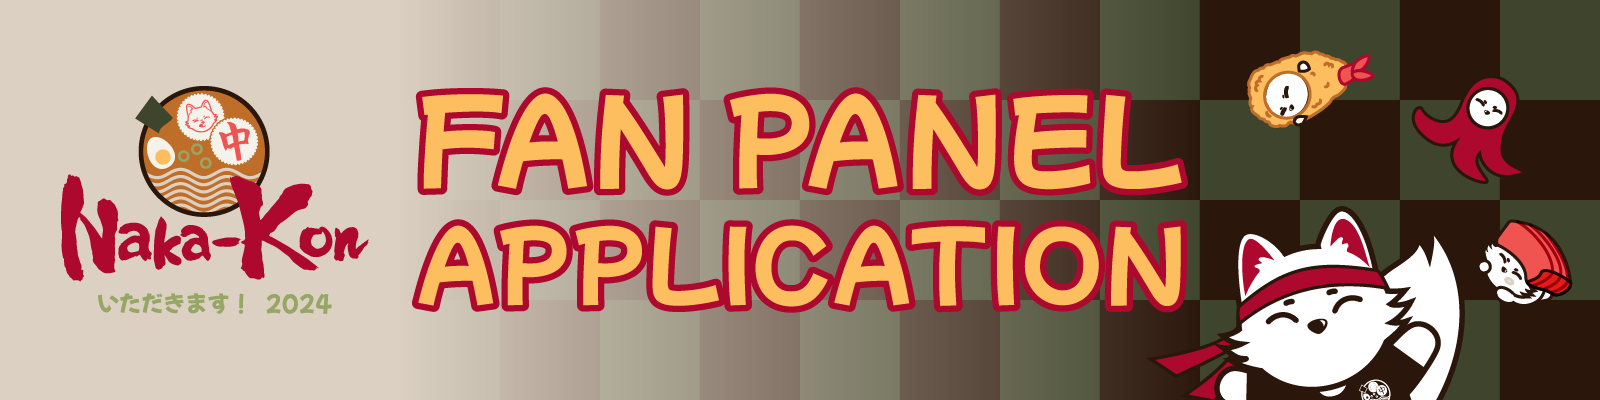 Fan Panel Application Form 2024 advertisement